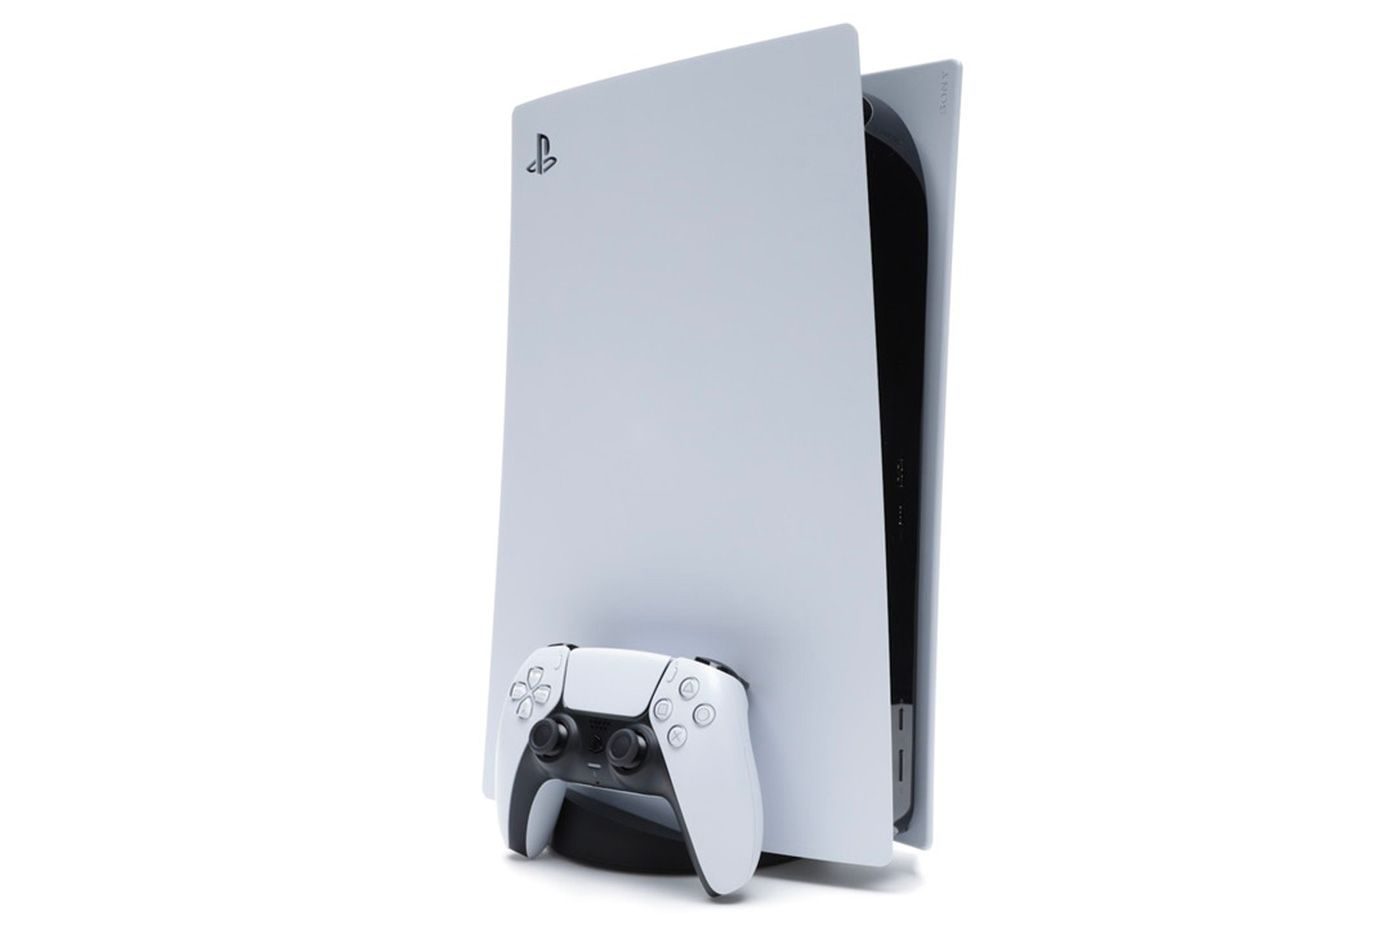 PlayStation 5 Sony